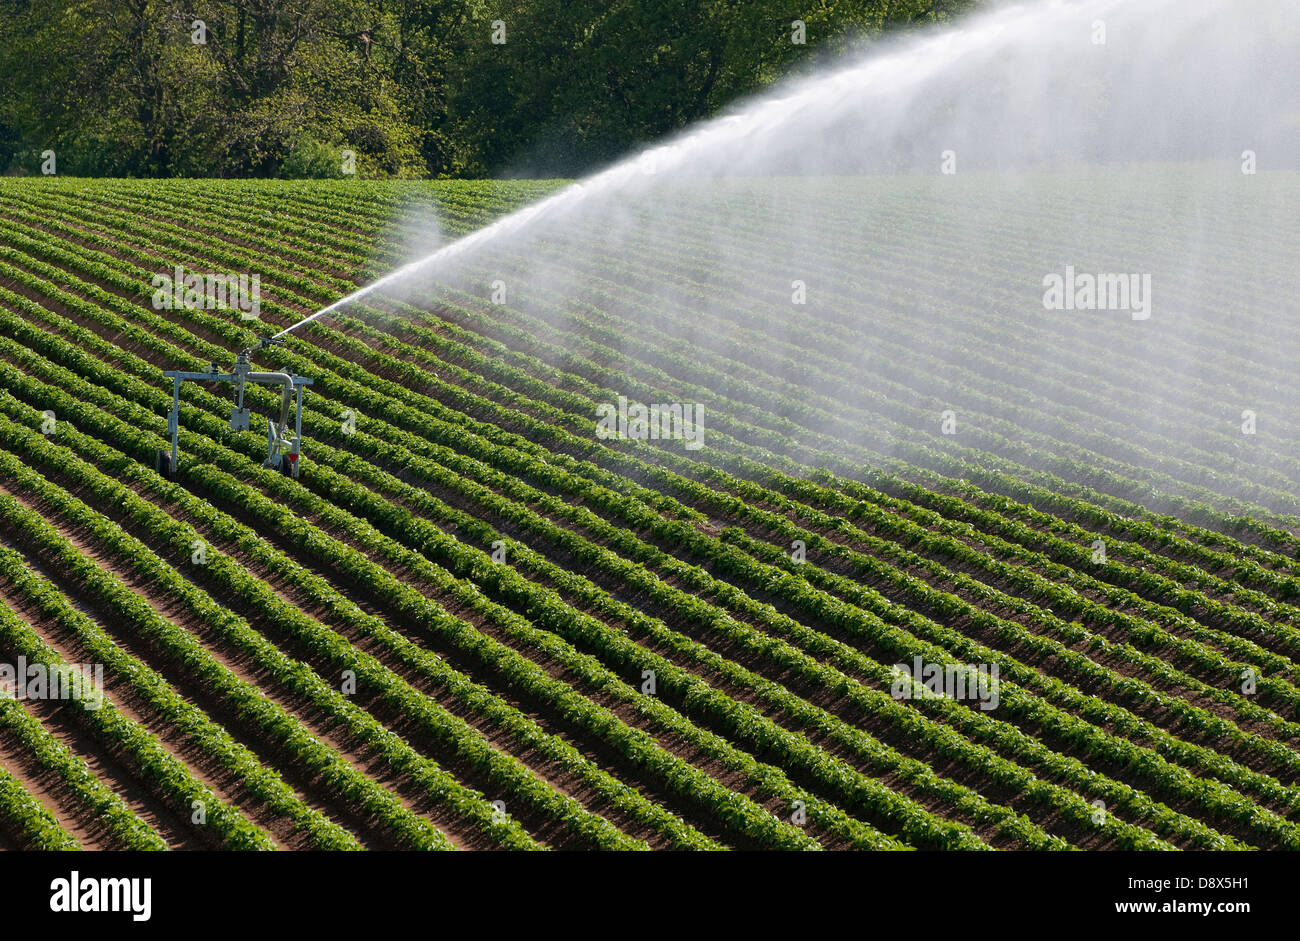 watering potato crop in norfolk, england Stock Photo